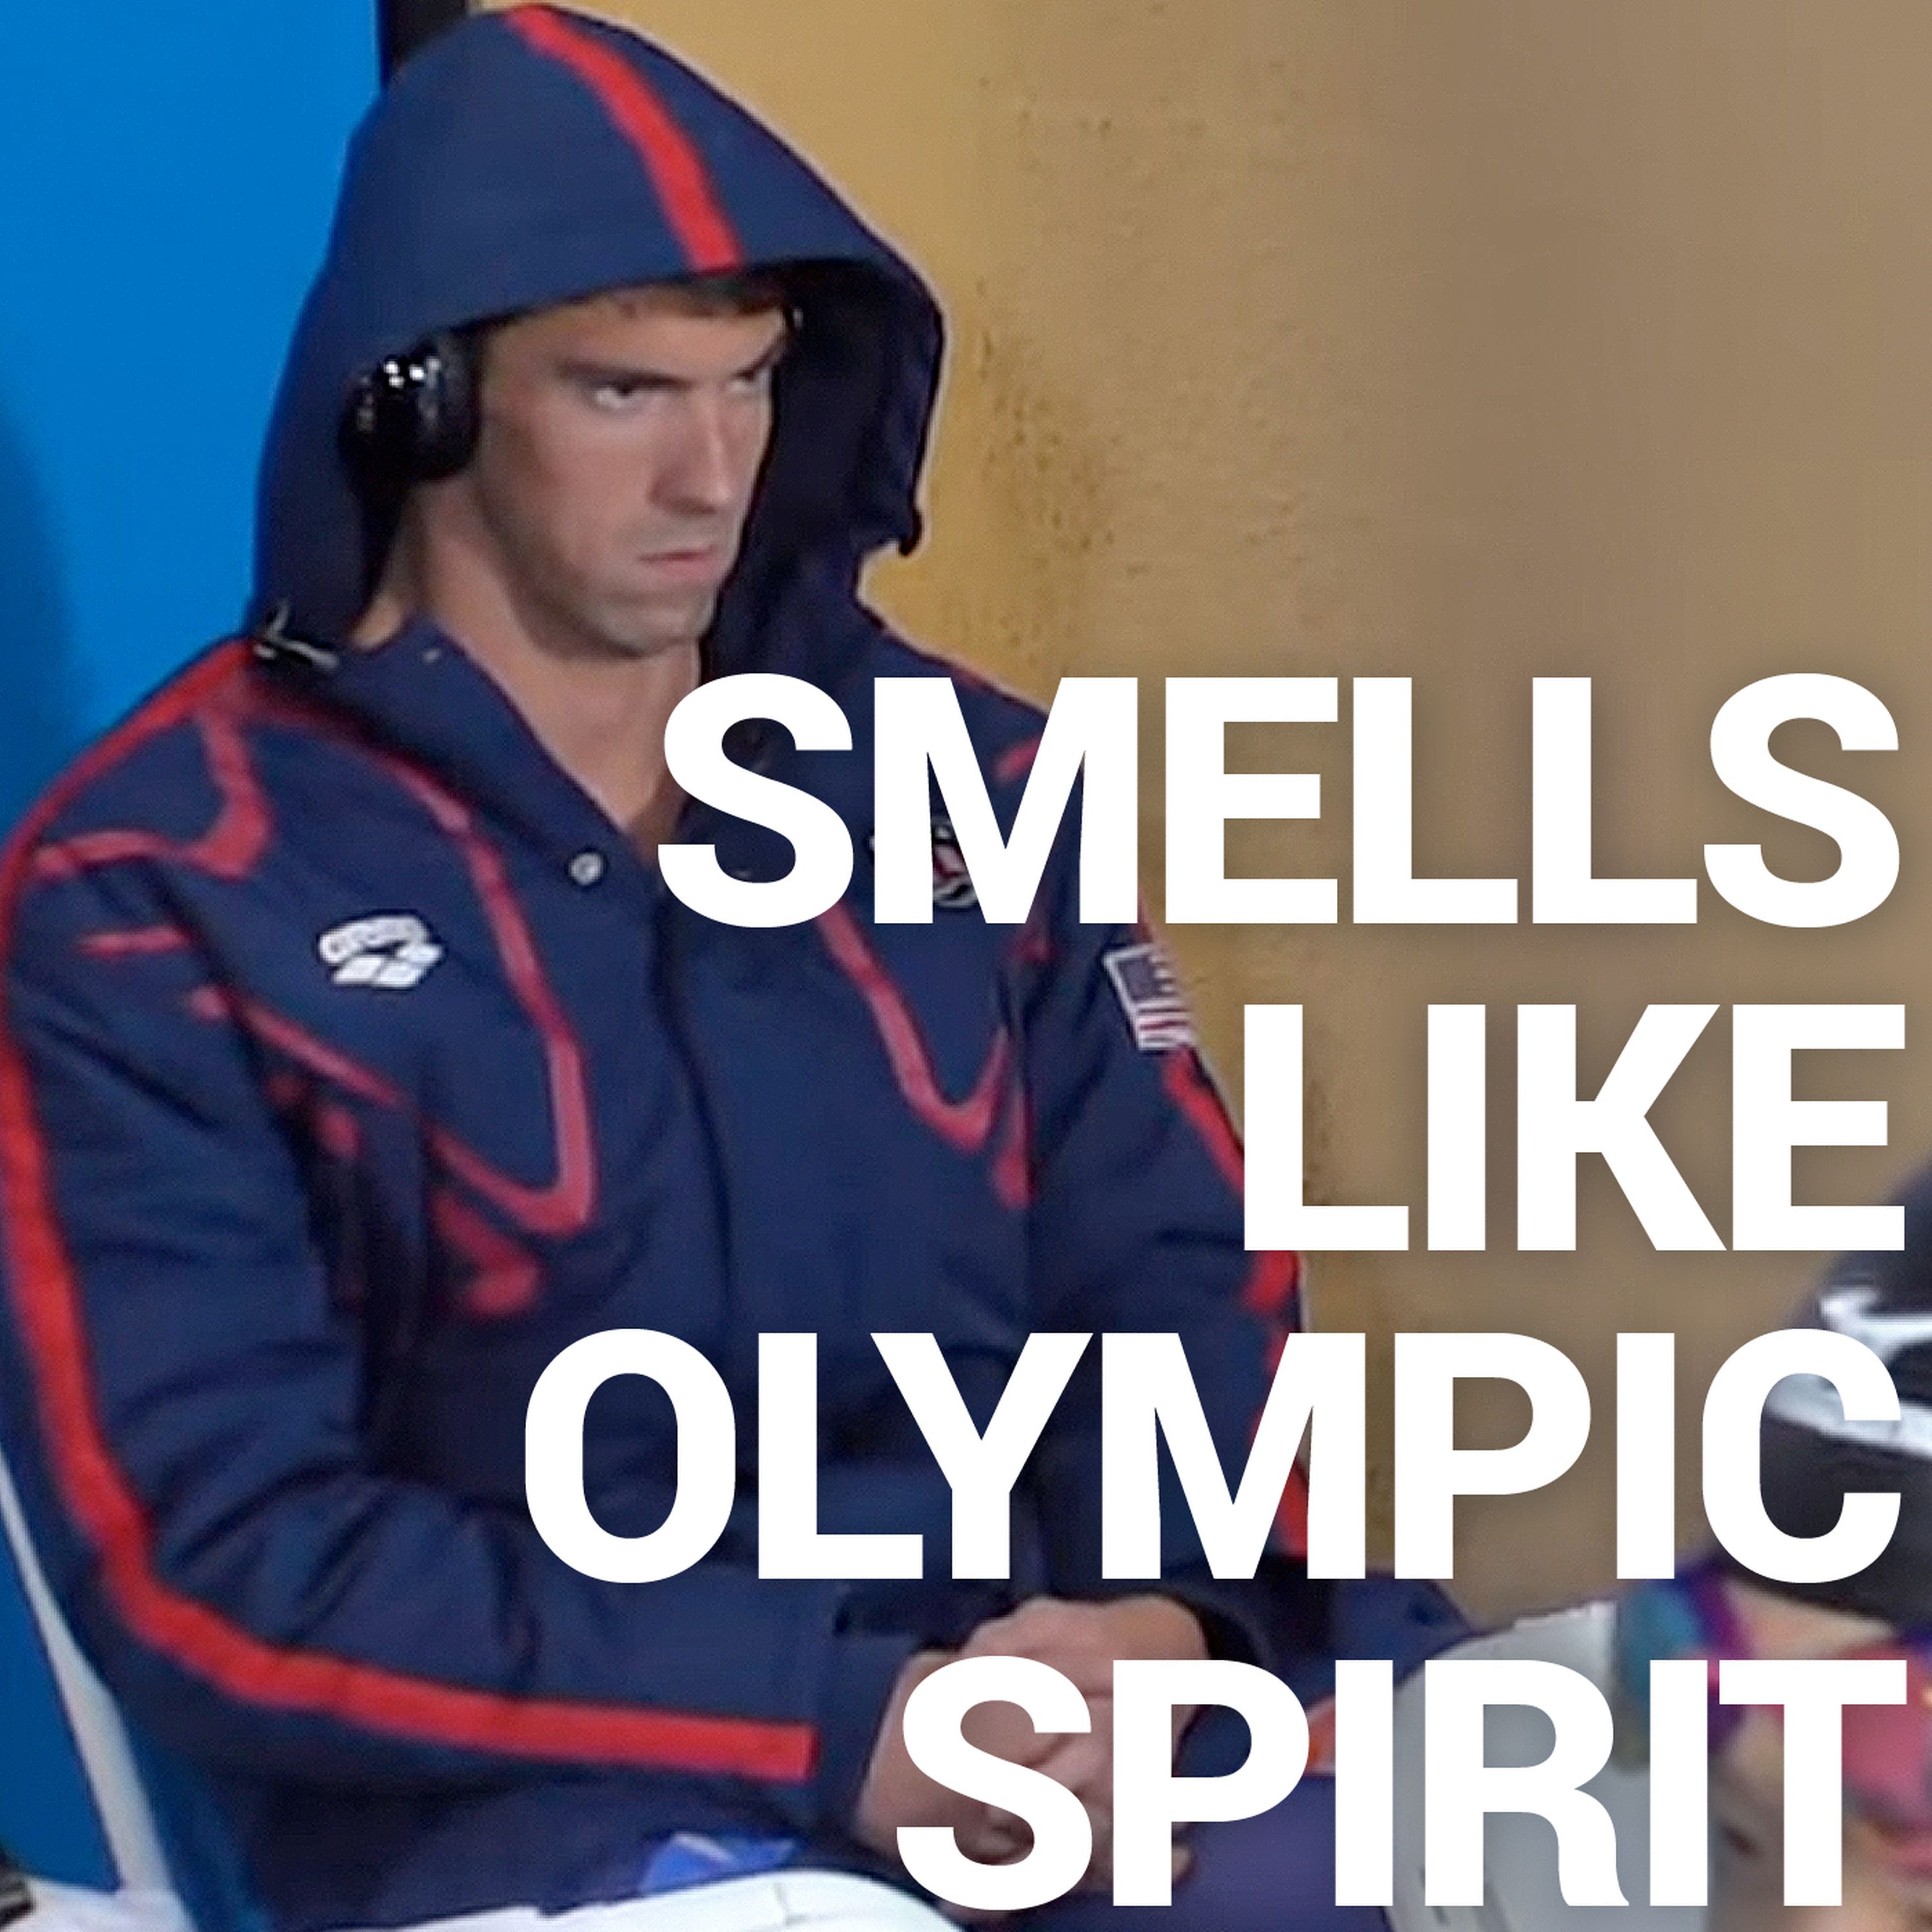 Smells Like Olympic Spirit